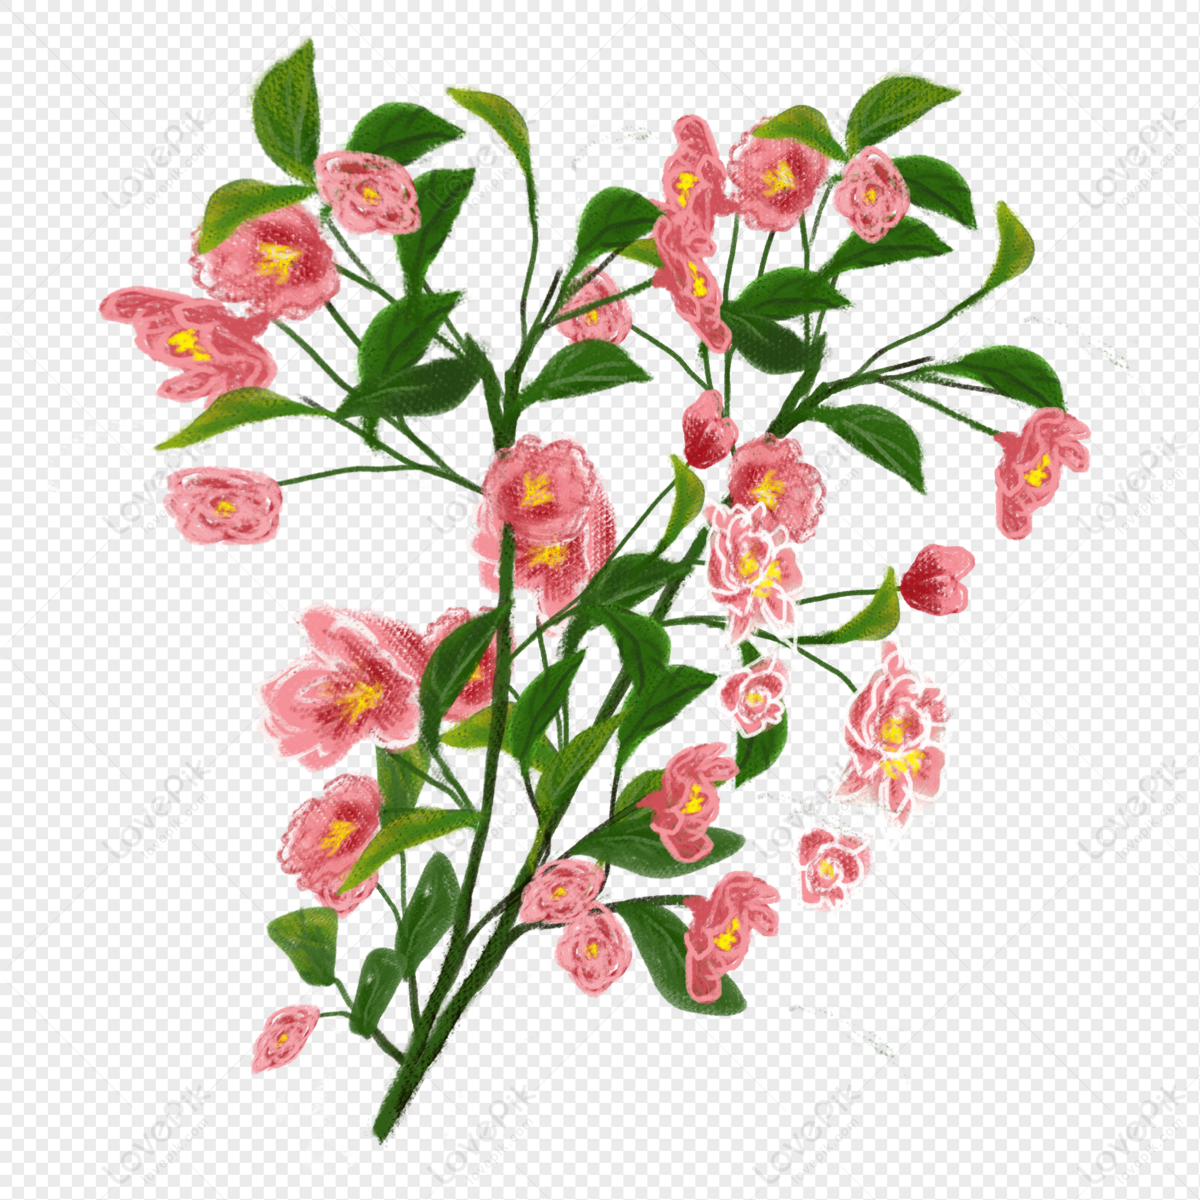 Flor De Begonia PNG Imágenes Gratis - Lovepik